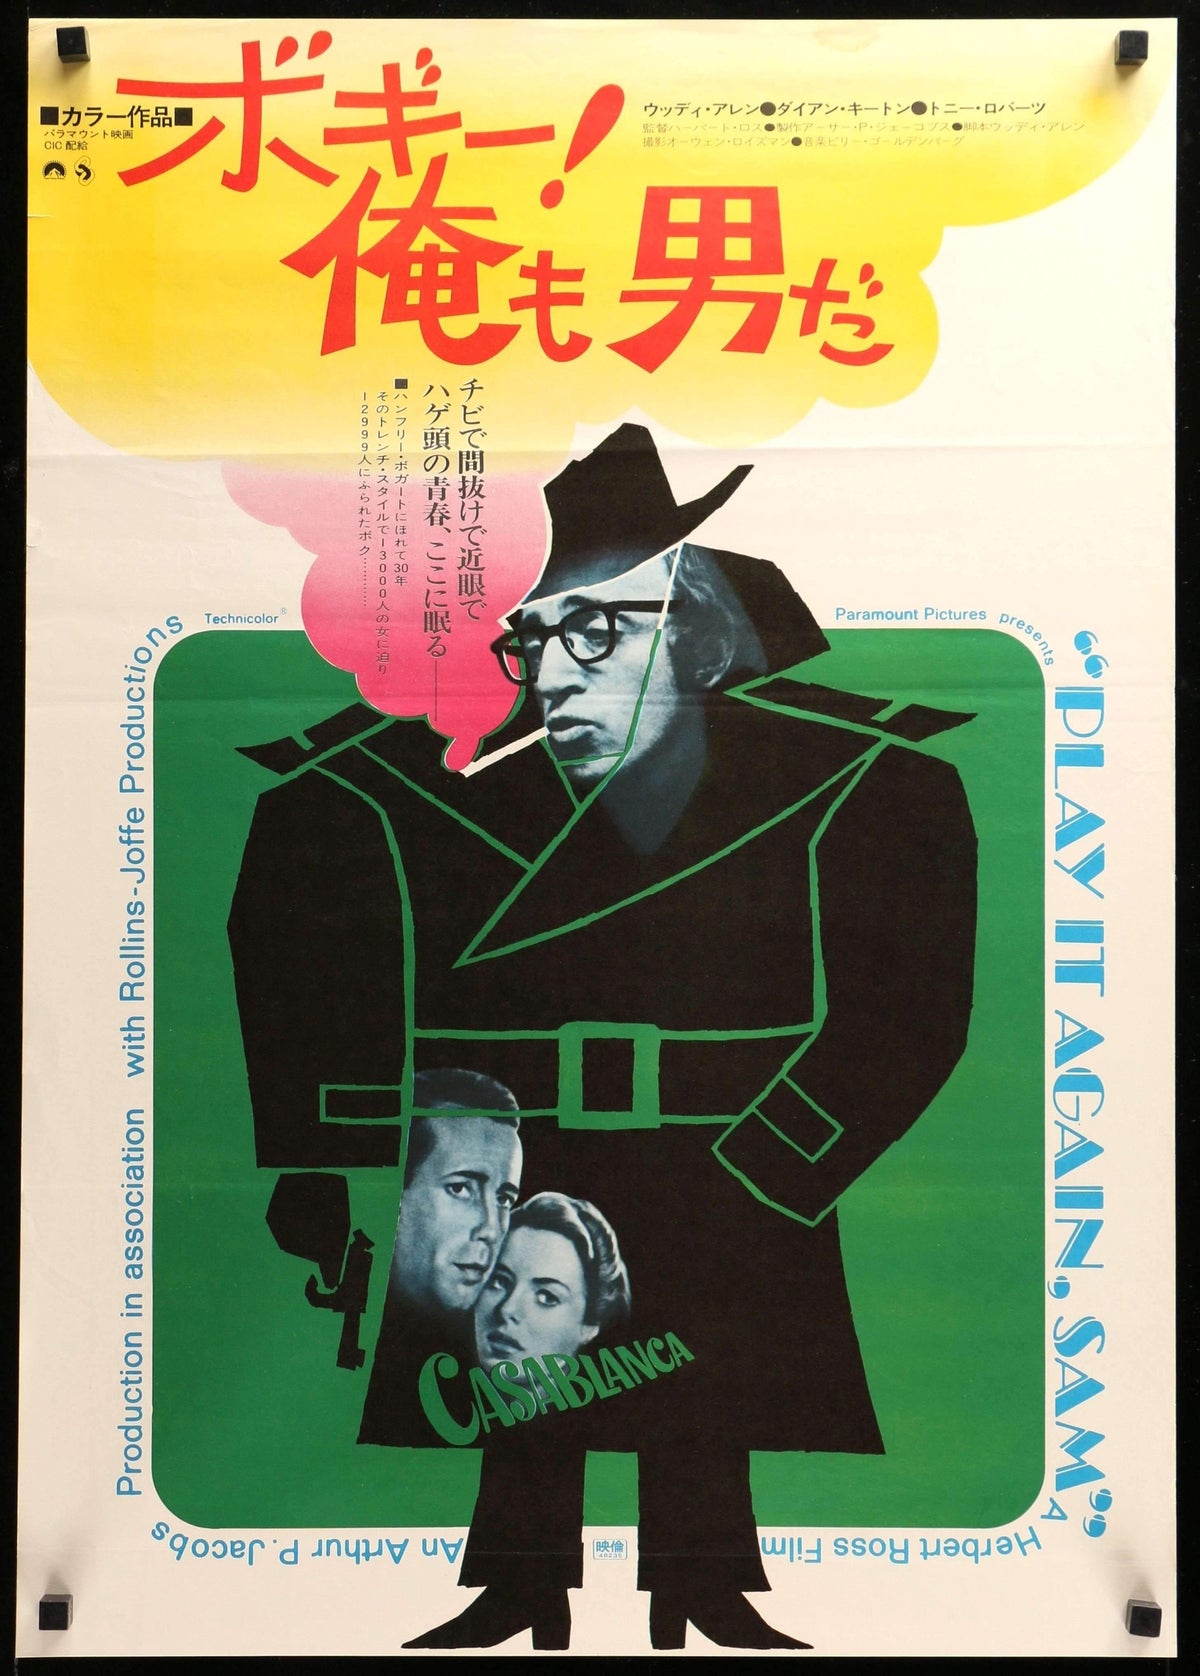 Play It Again, Sam (1972) original movie poster for sale at Original Film Art